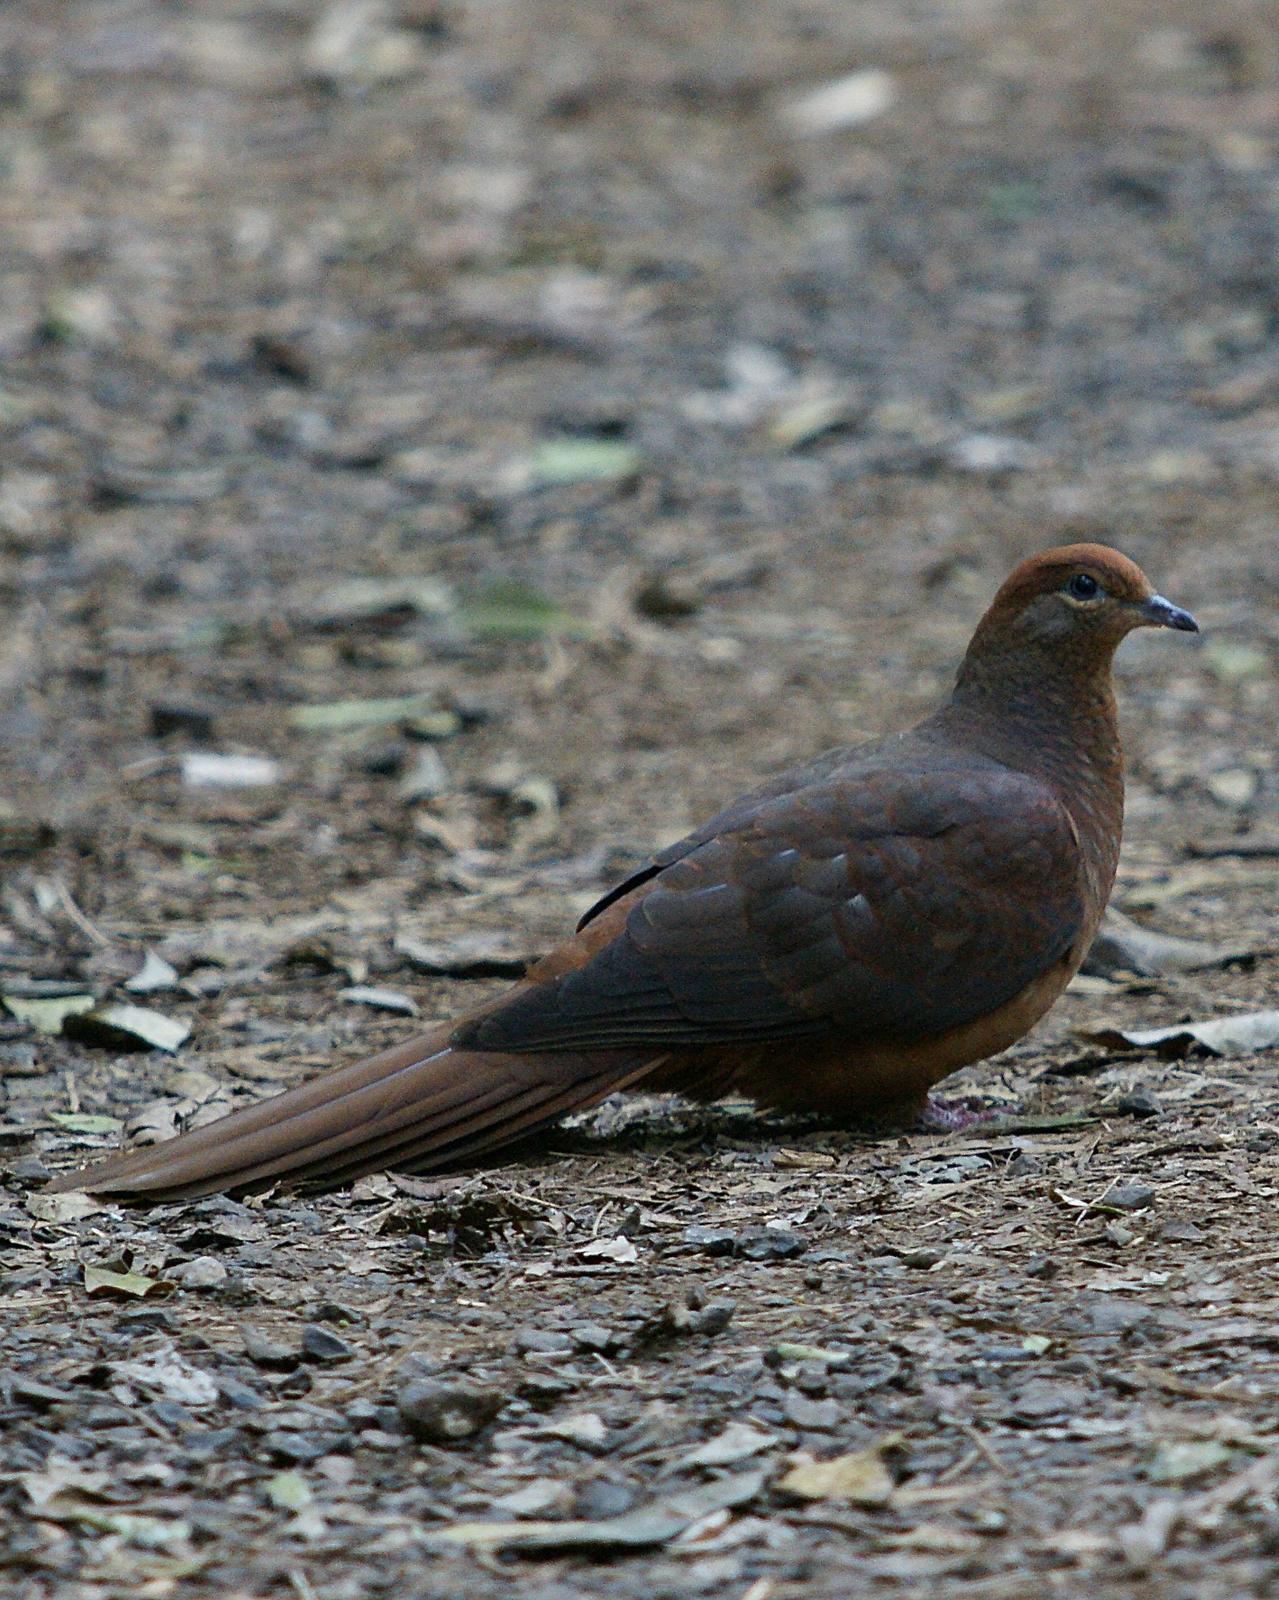 Brown Cuckoo-Dove Photo by Steve Percival